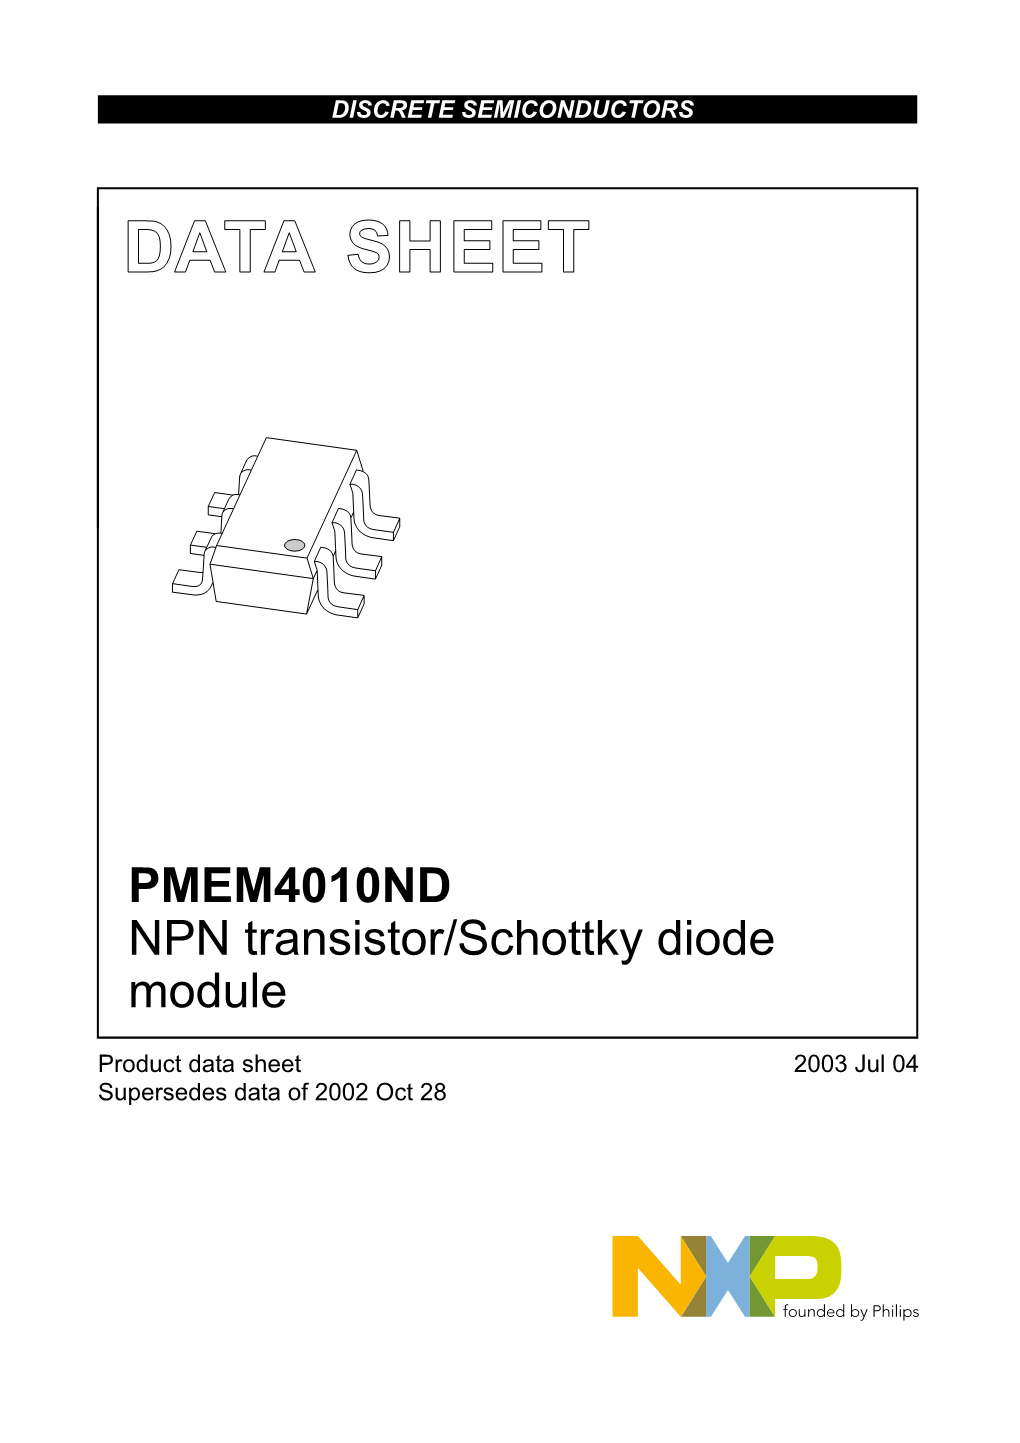 PMEM4010ND NPN Transistor/Schottky Diode Module